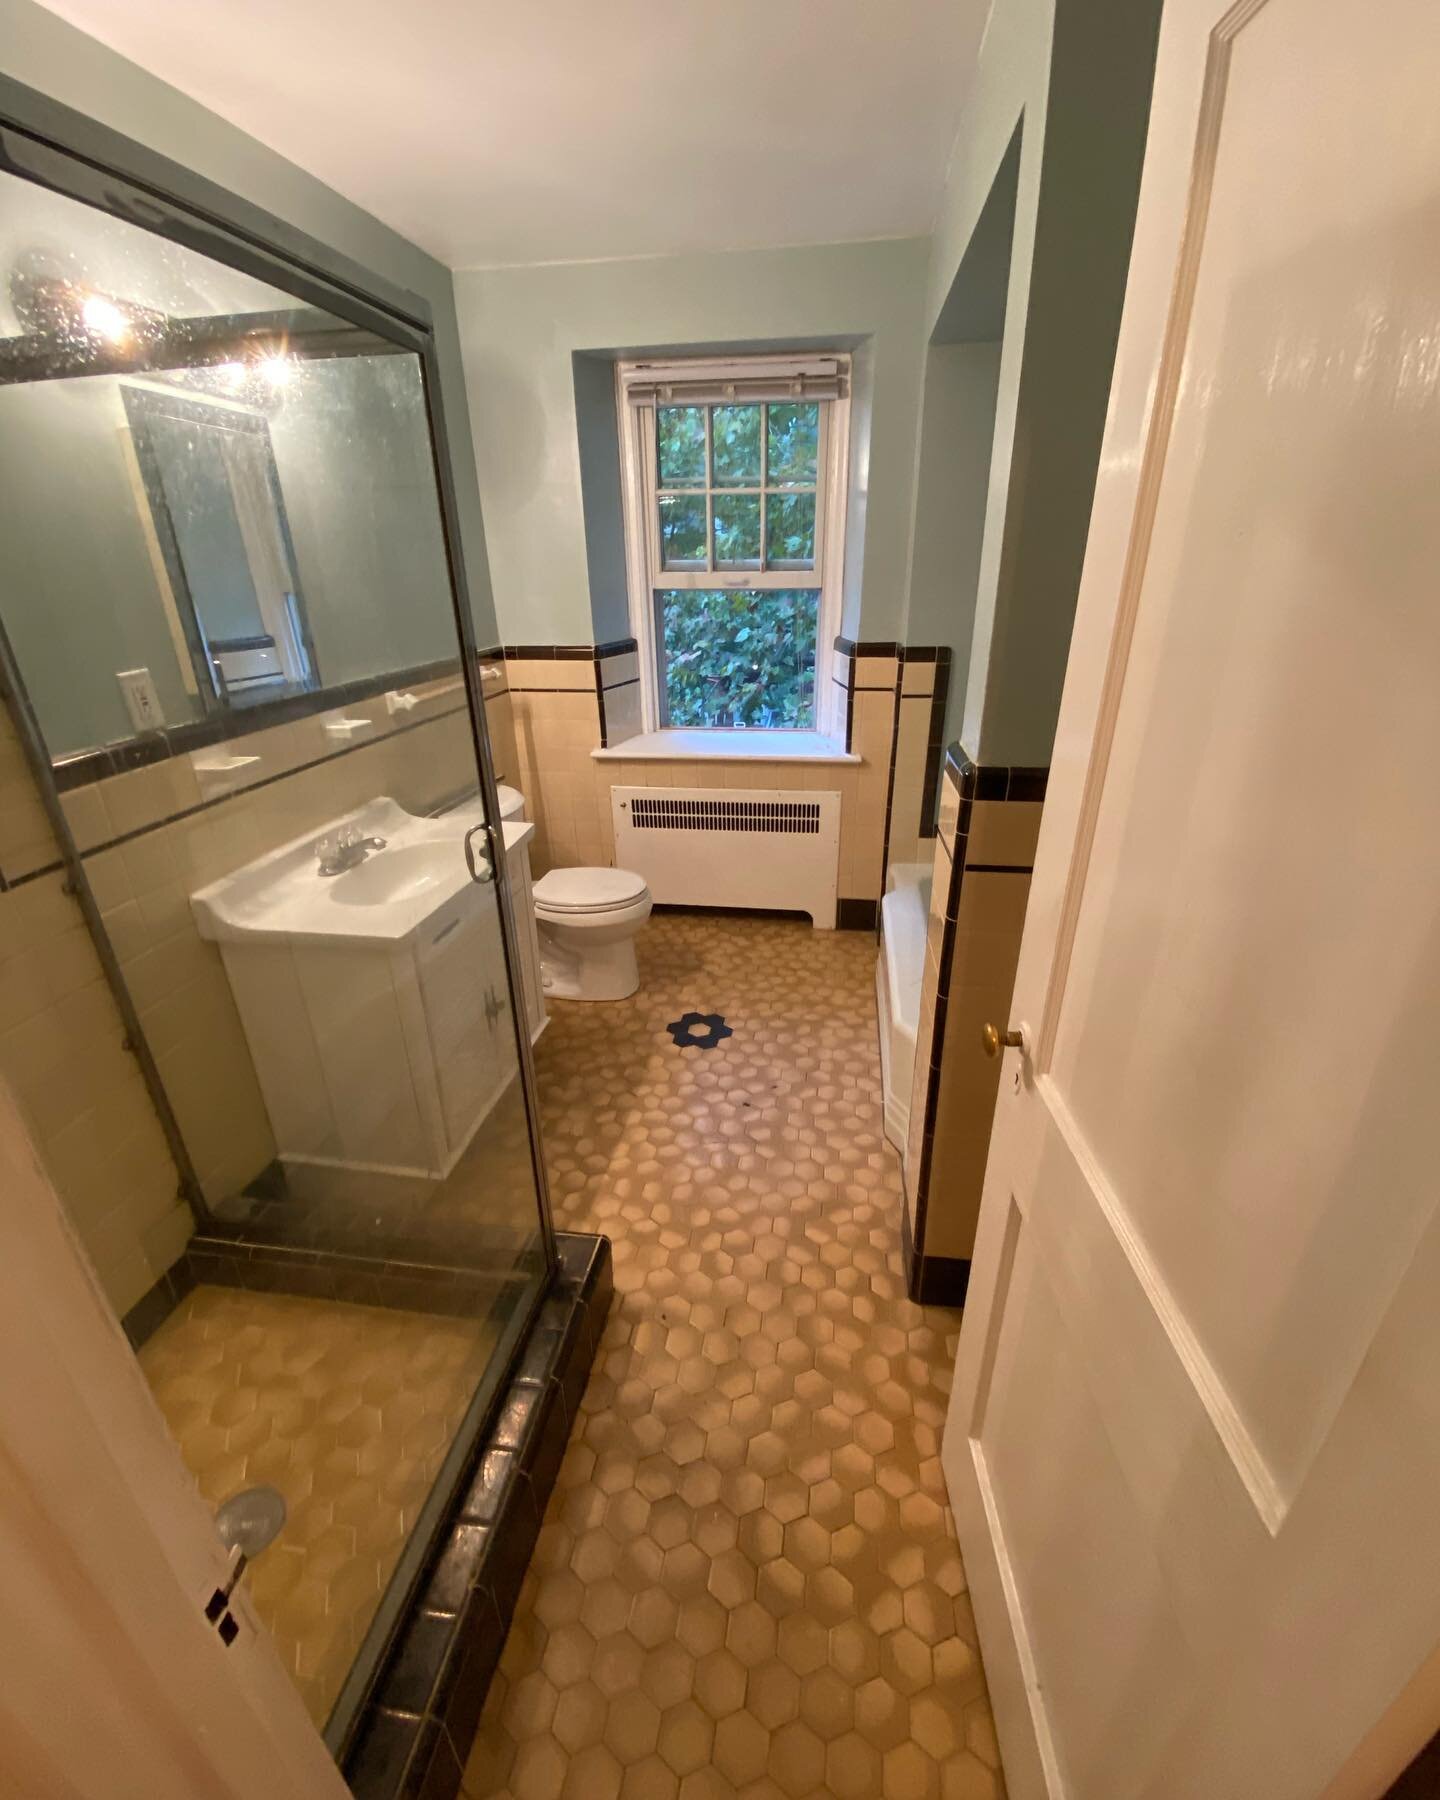 Let's just say we need double vanities in all bathrooms!!! 
.
.

#PaysToBeDifferent

#BetOnYourSelf

#DirtyHandsCleanMoney

#tiledesign #tile #bathroomdesign #bath #bathroom #beforeandafter #shower #tub #TileWork #CuttingEdgeStudio #custom #house #re